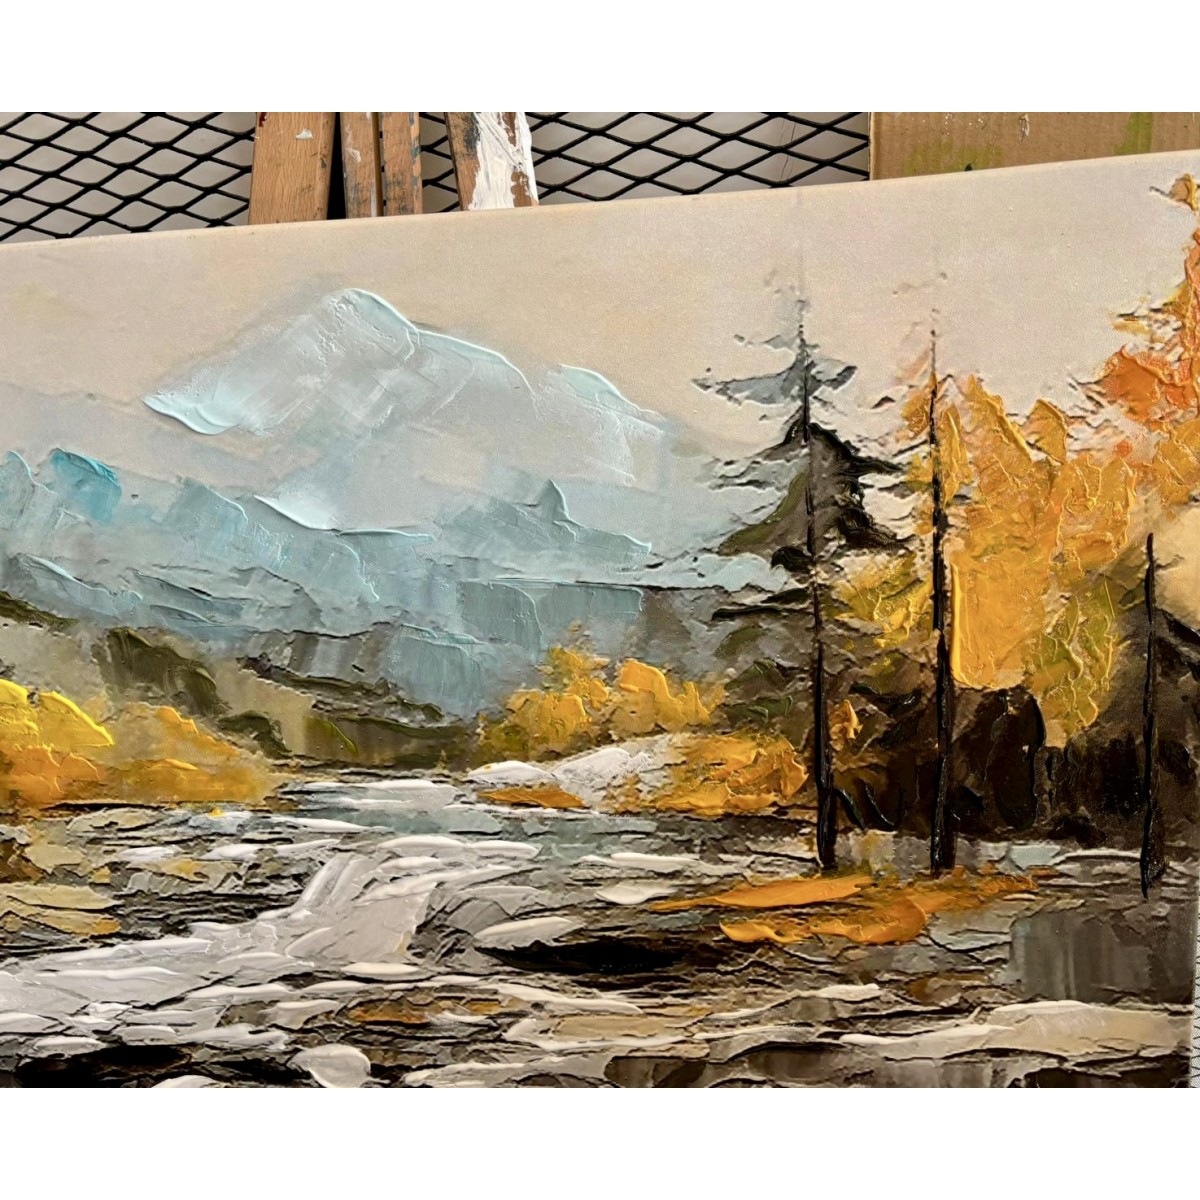 Frozen River 3D Heavy Textured Partial Oil Painting